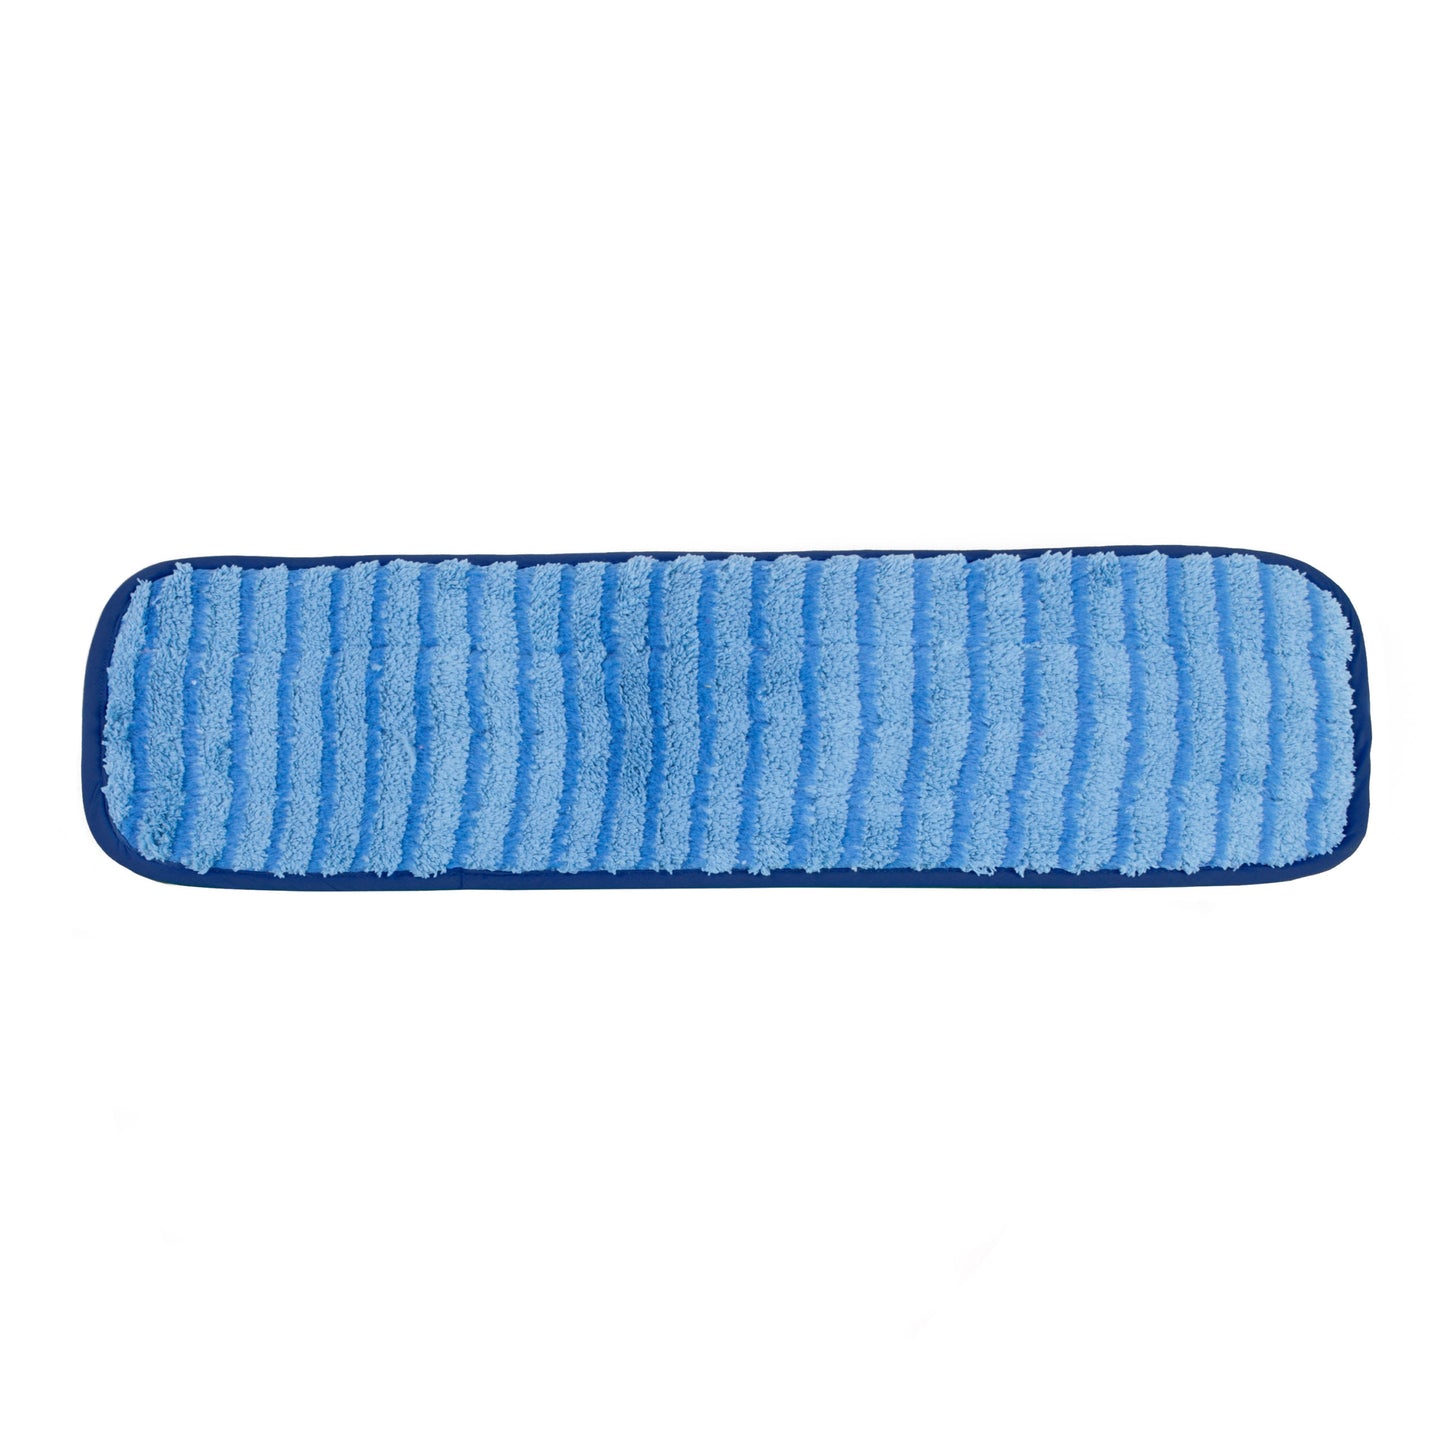 ADI Durafiber Scrubber Pad, 24 inch, Medium Bristles with Blue Piping